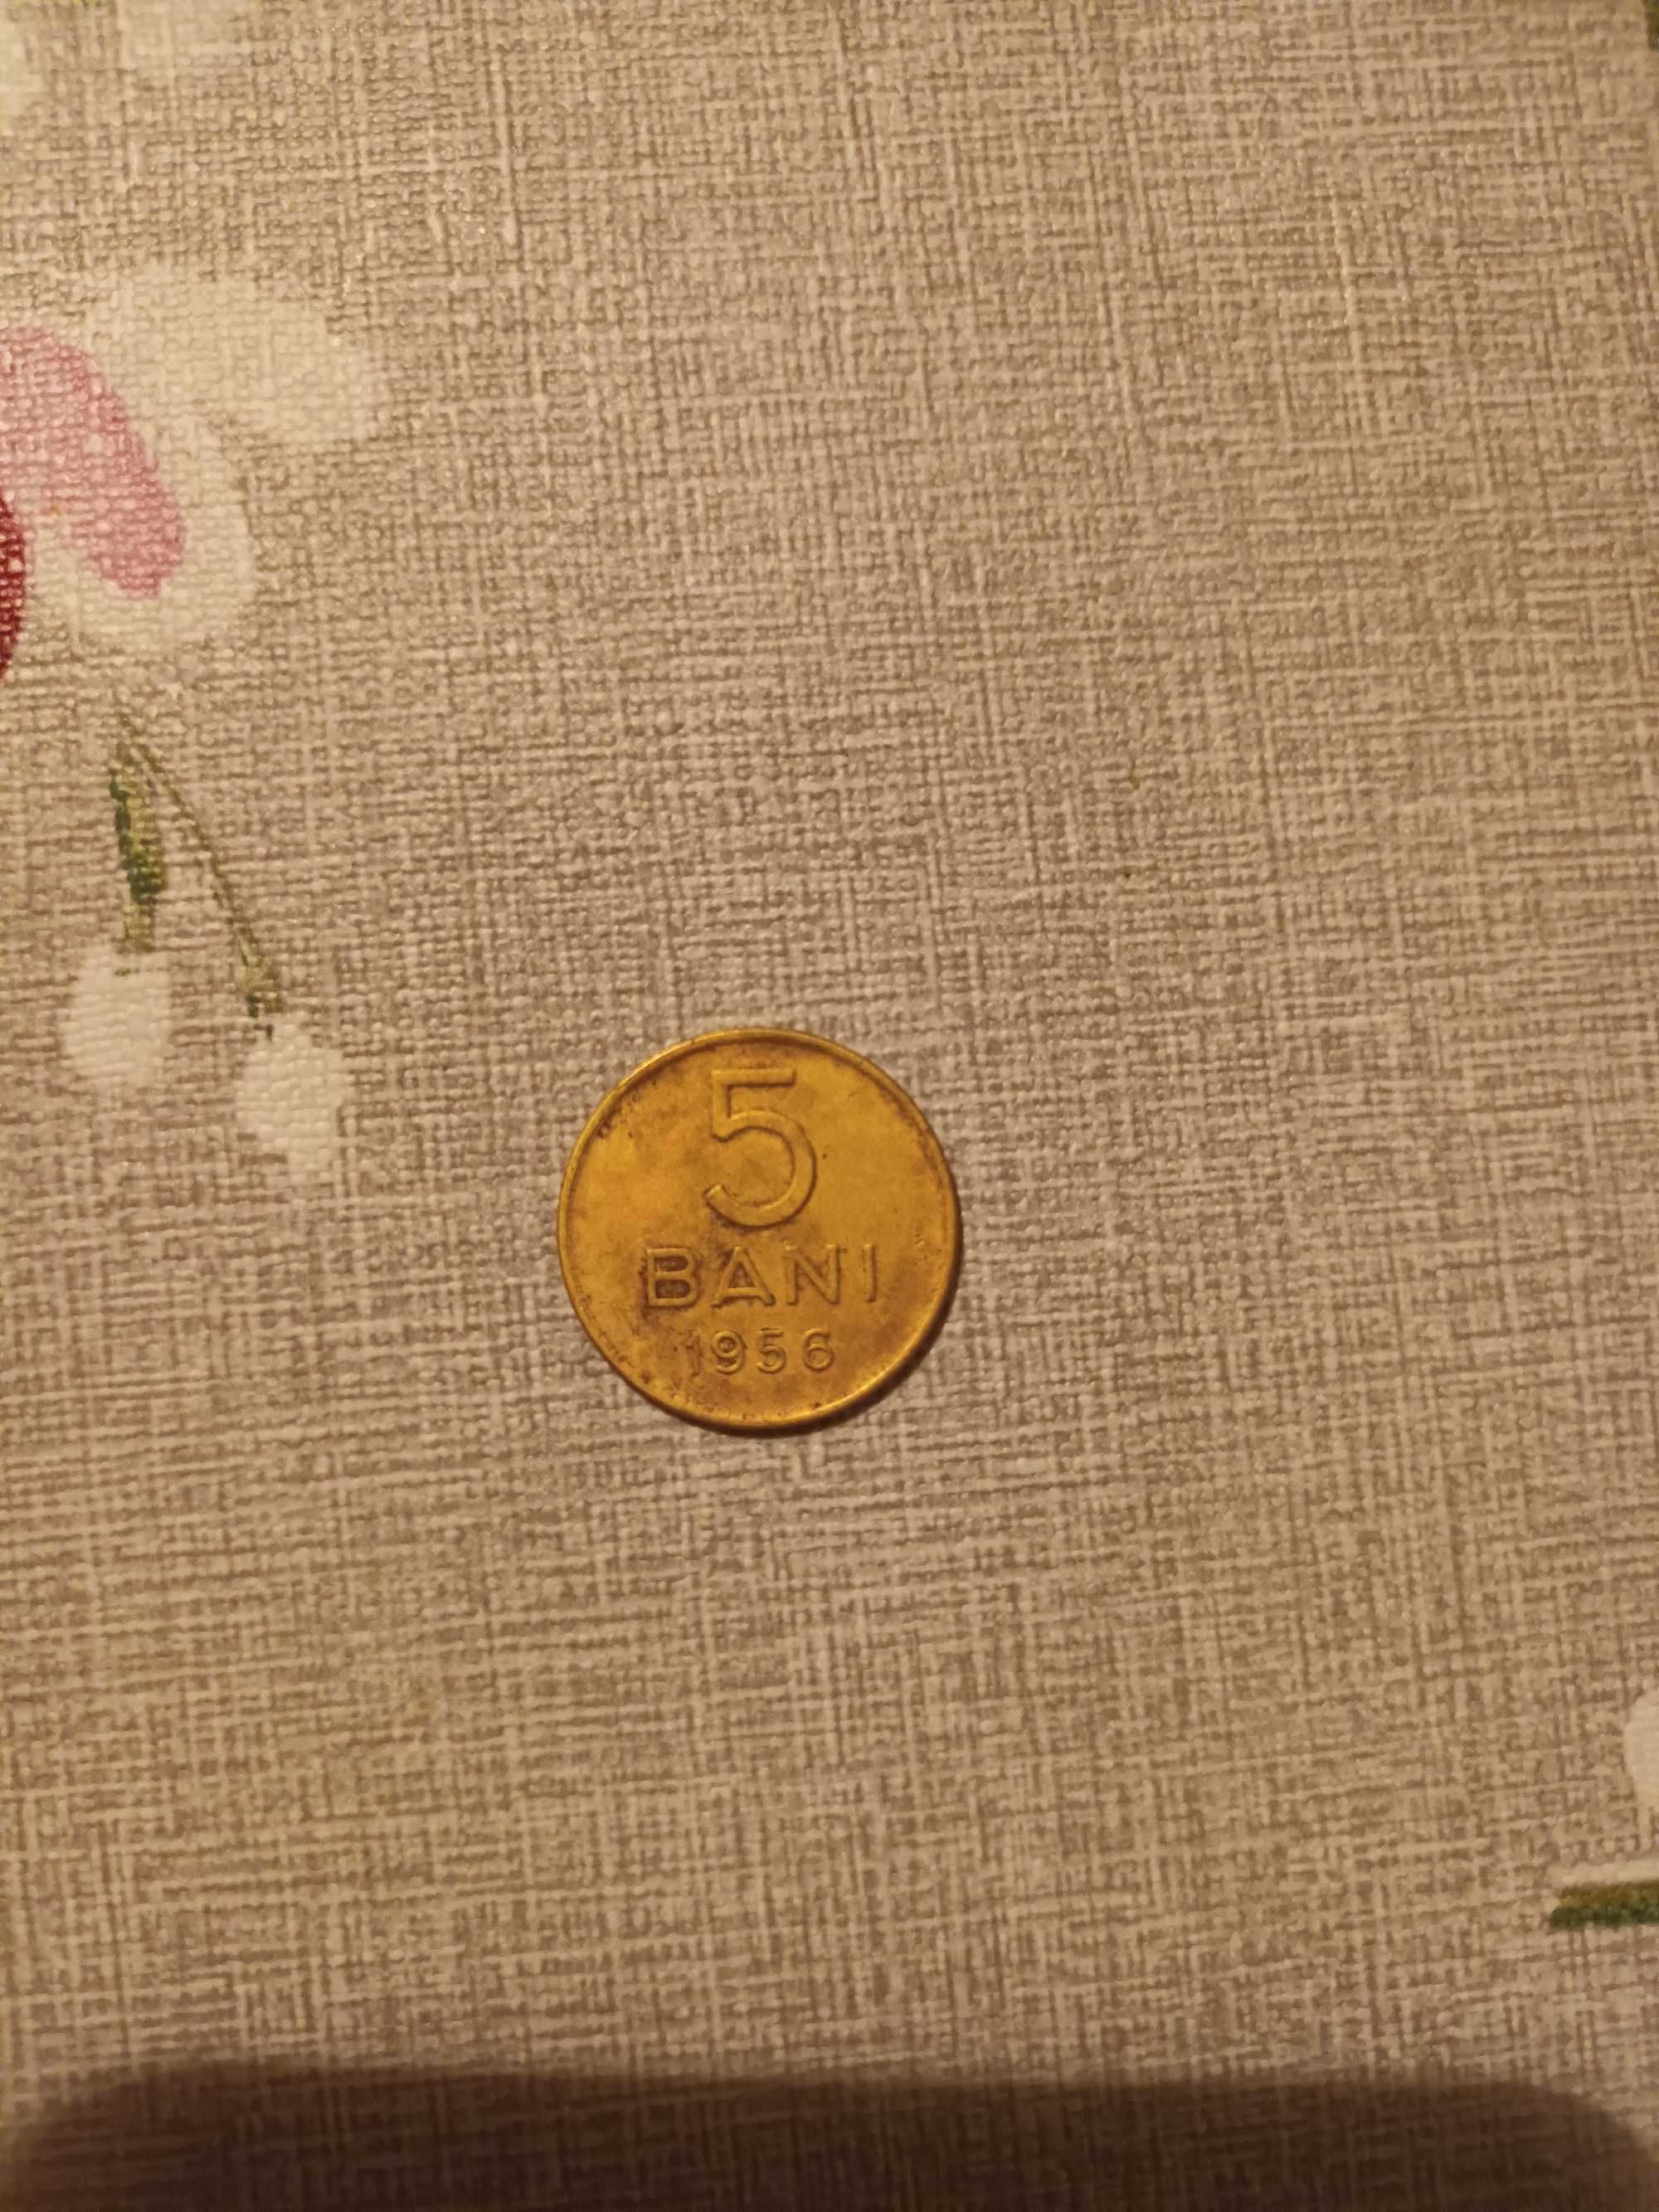 VAND moneda 5 bau 1956